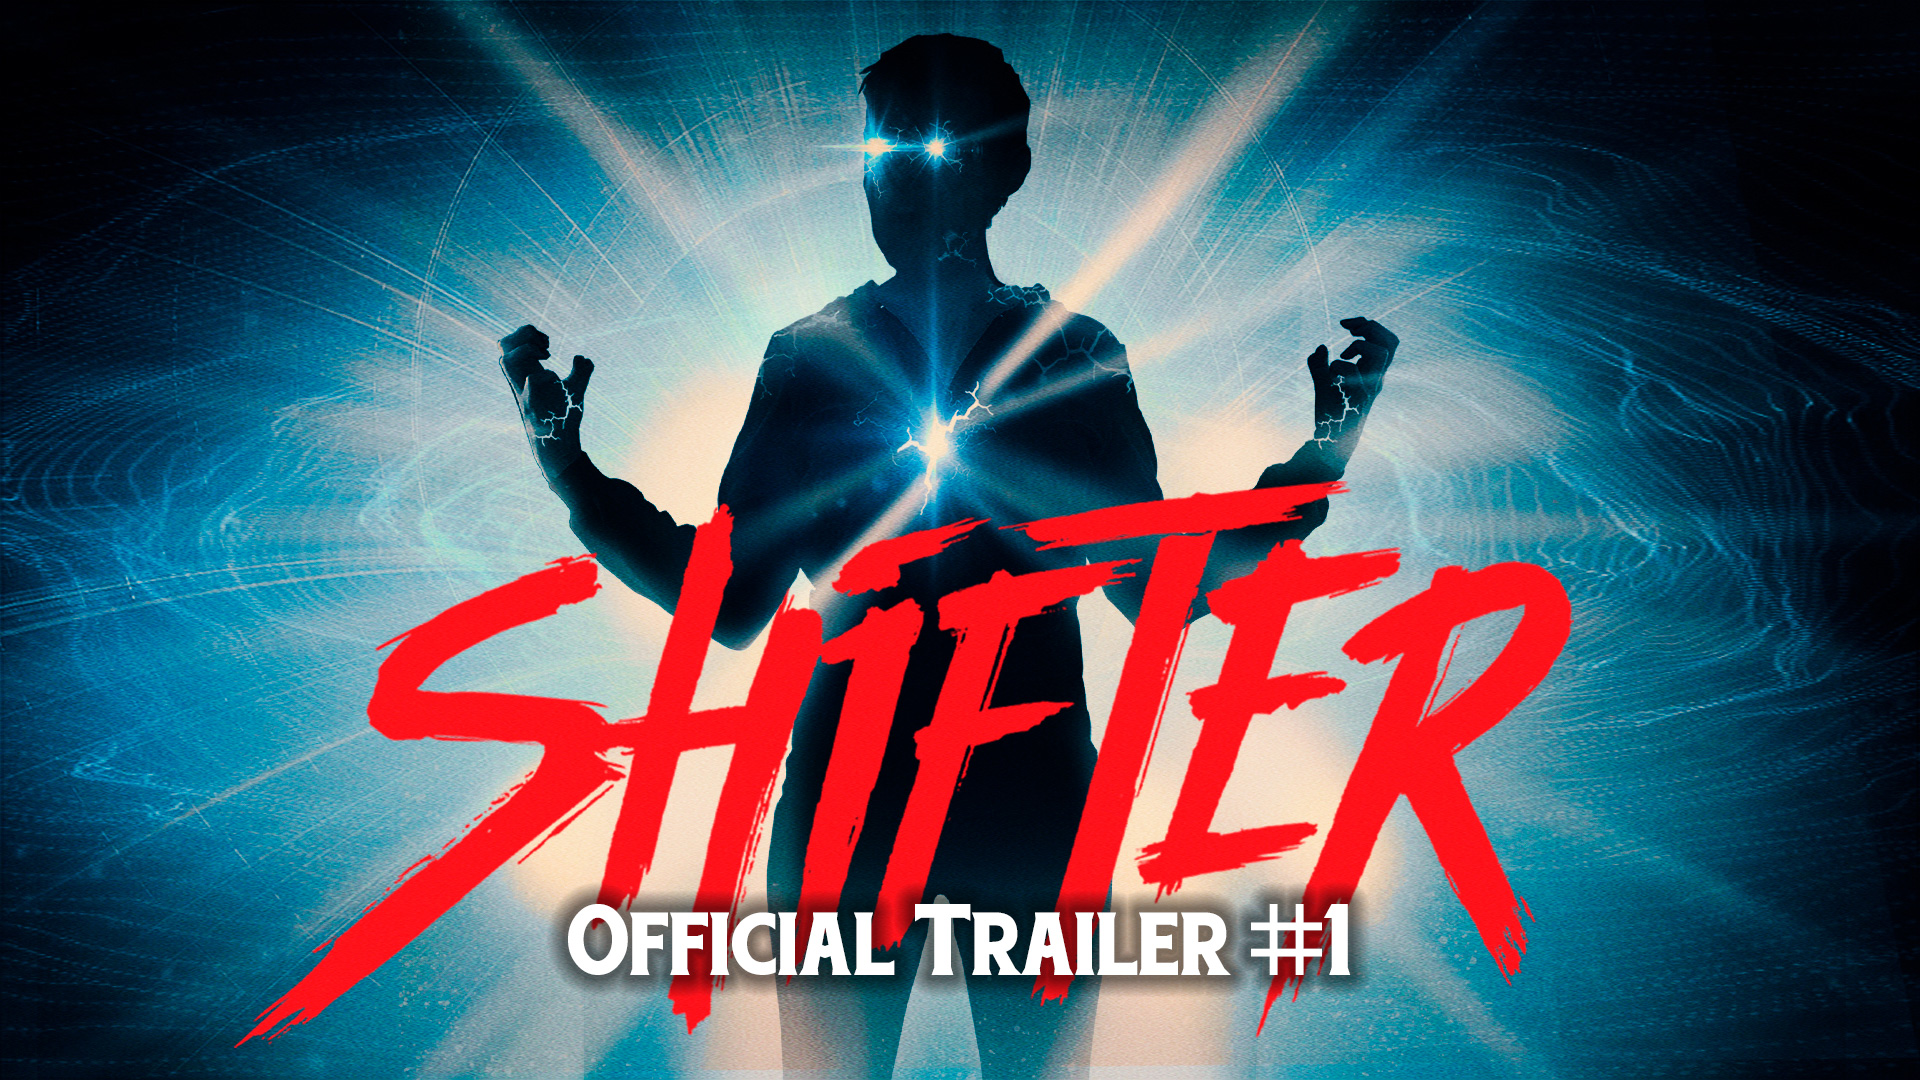 Shifter Official Trailer #1